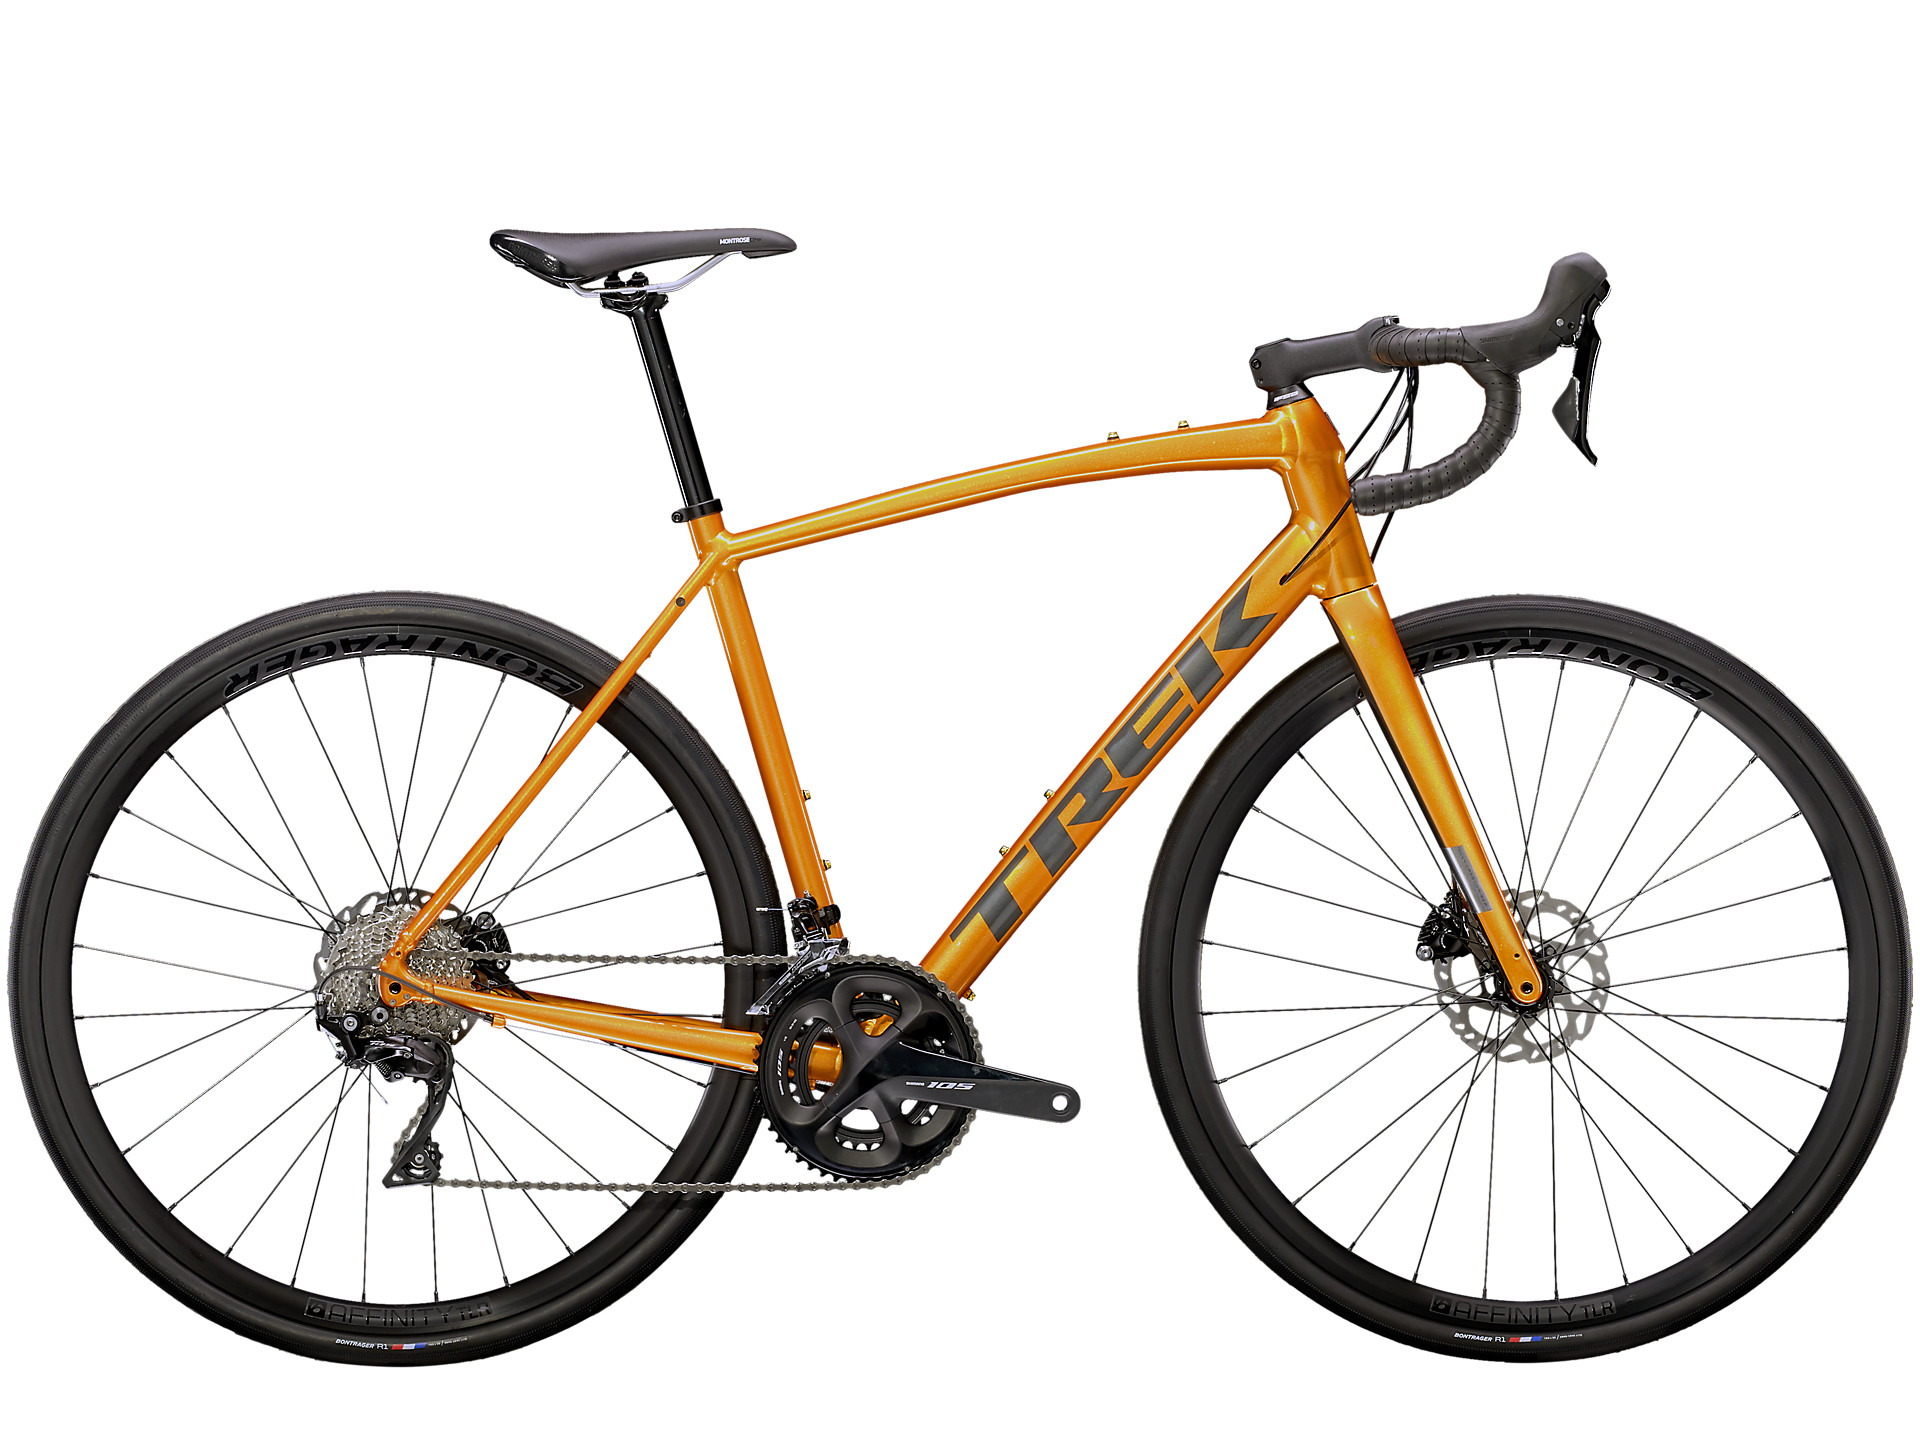 Orange Trek Domane AL 5 Disc road bike with Shimano 105 groupset 